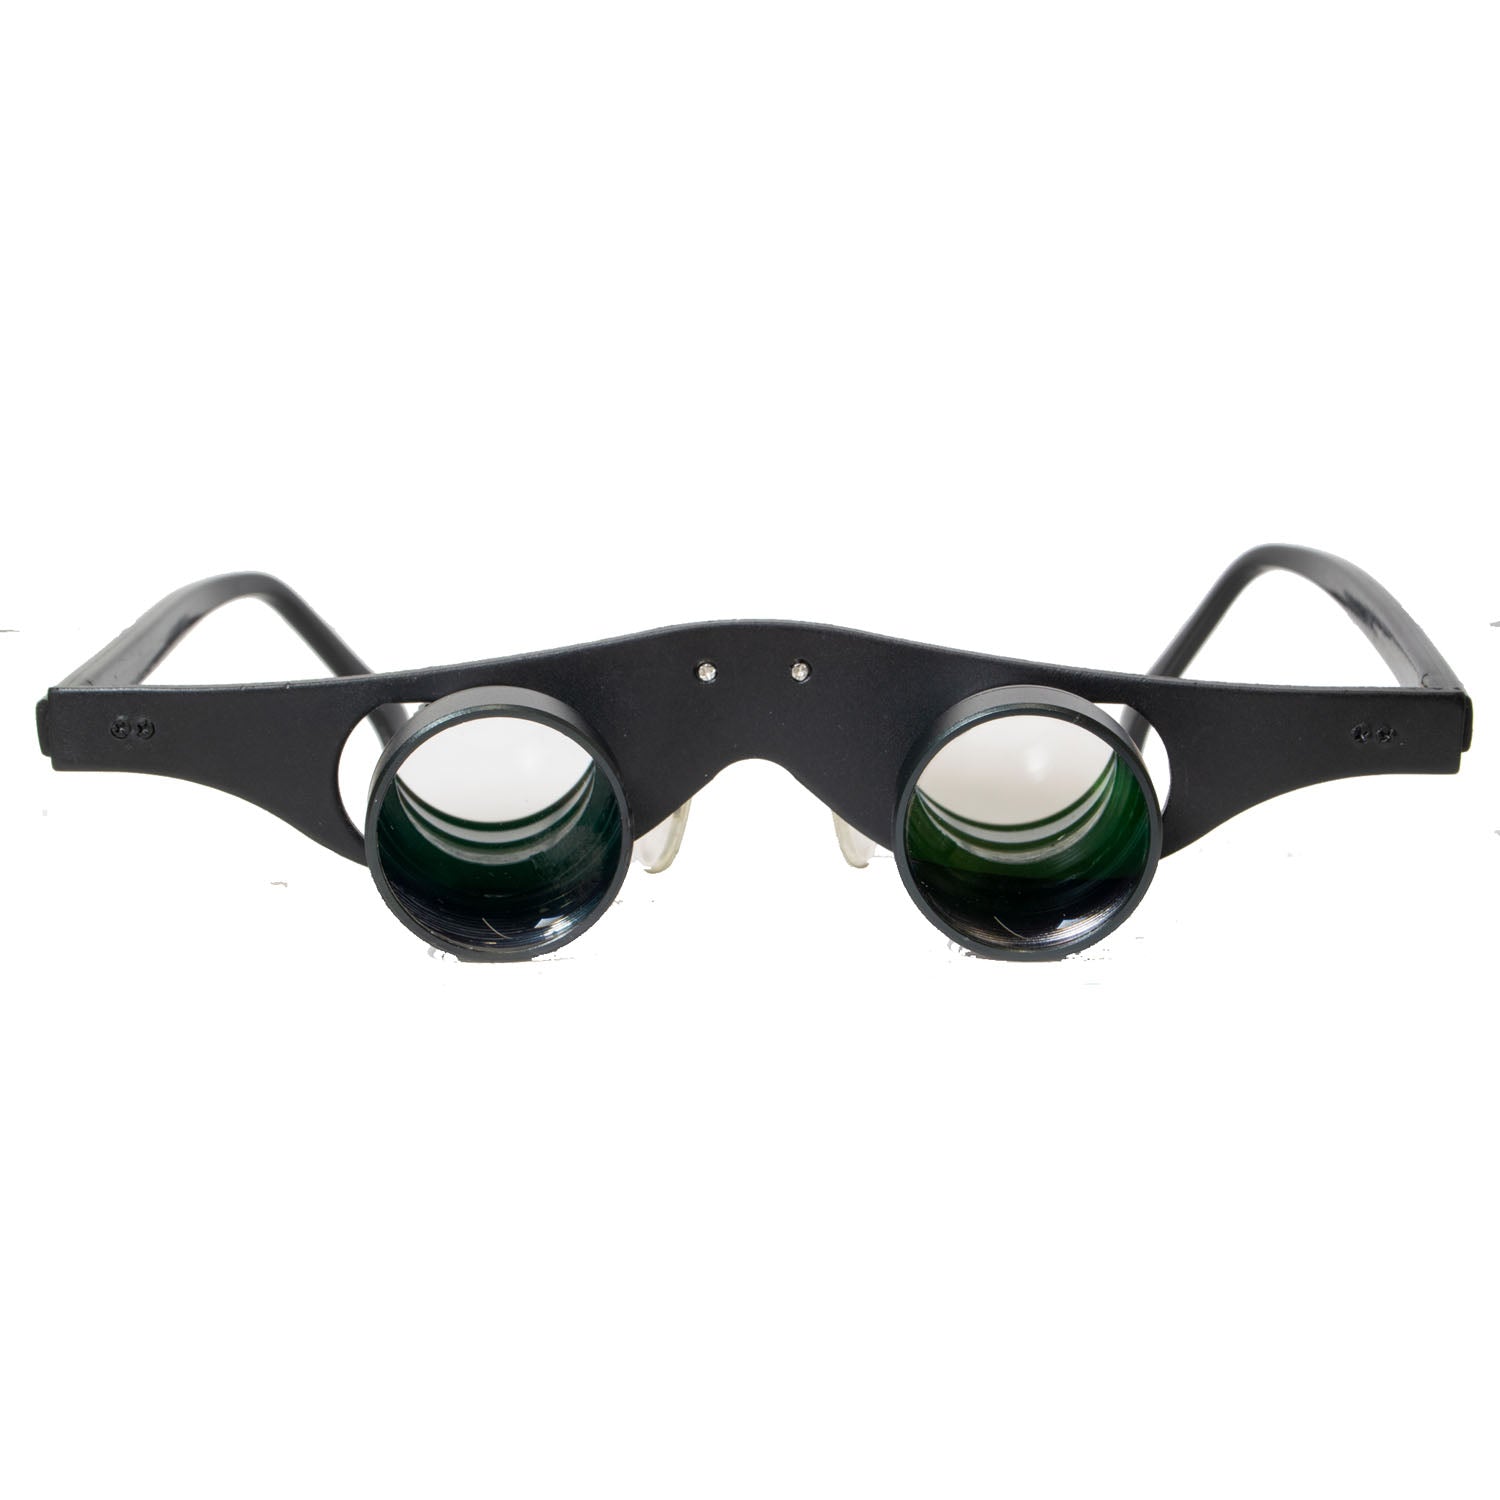 Binocular headband magnifier, 2.5X, 35cm working distance